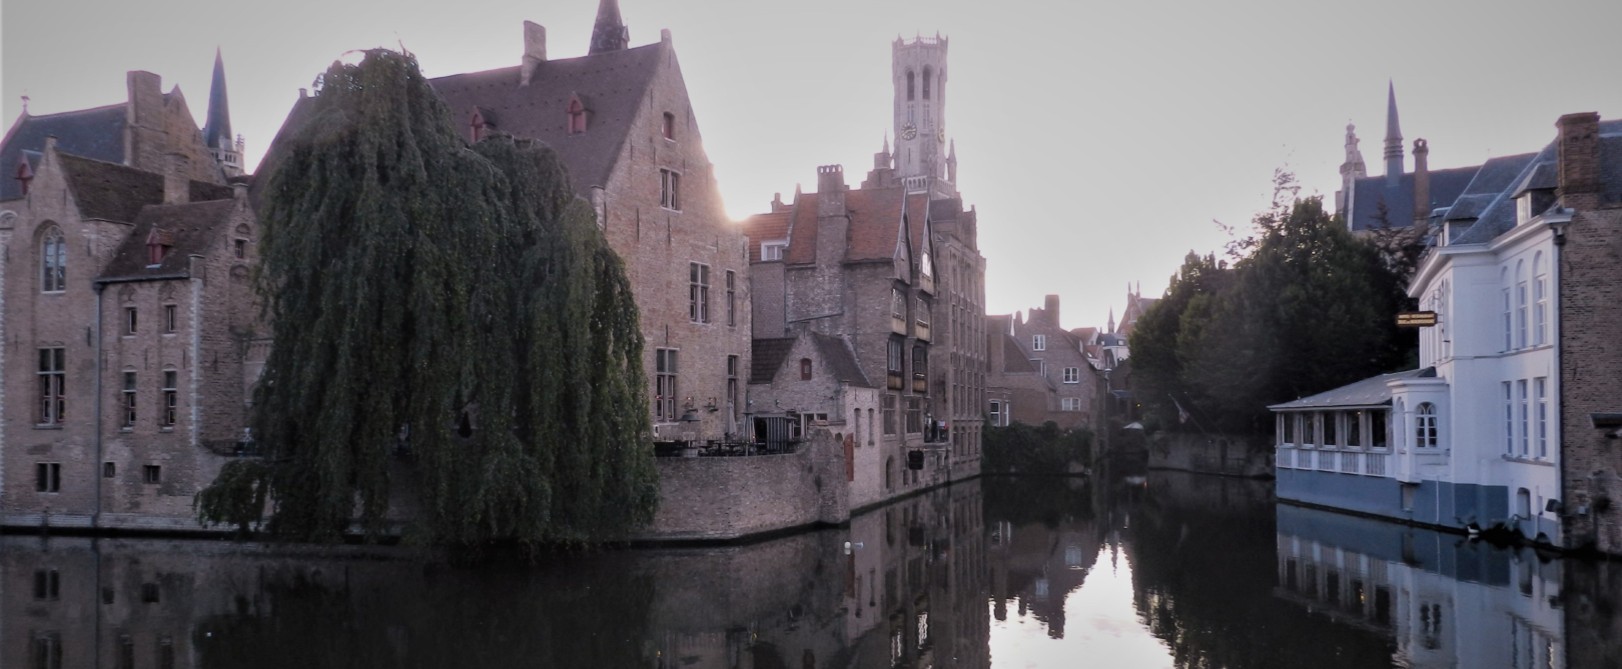 Bruges Rozenhoedkaai